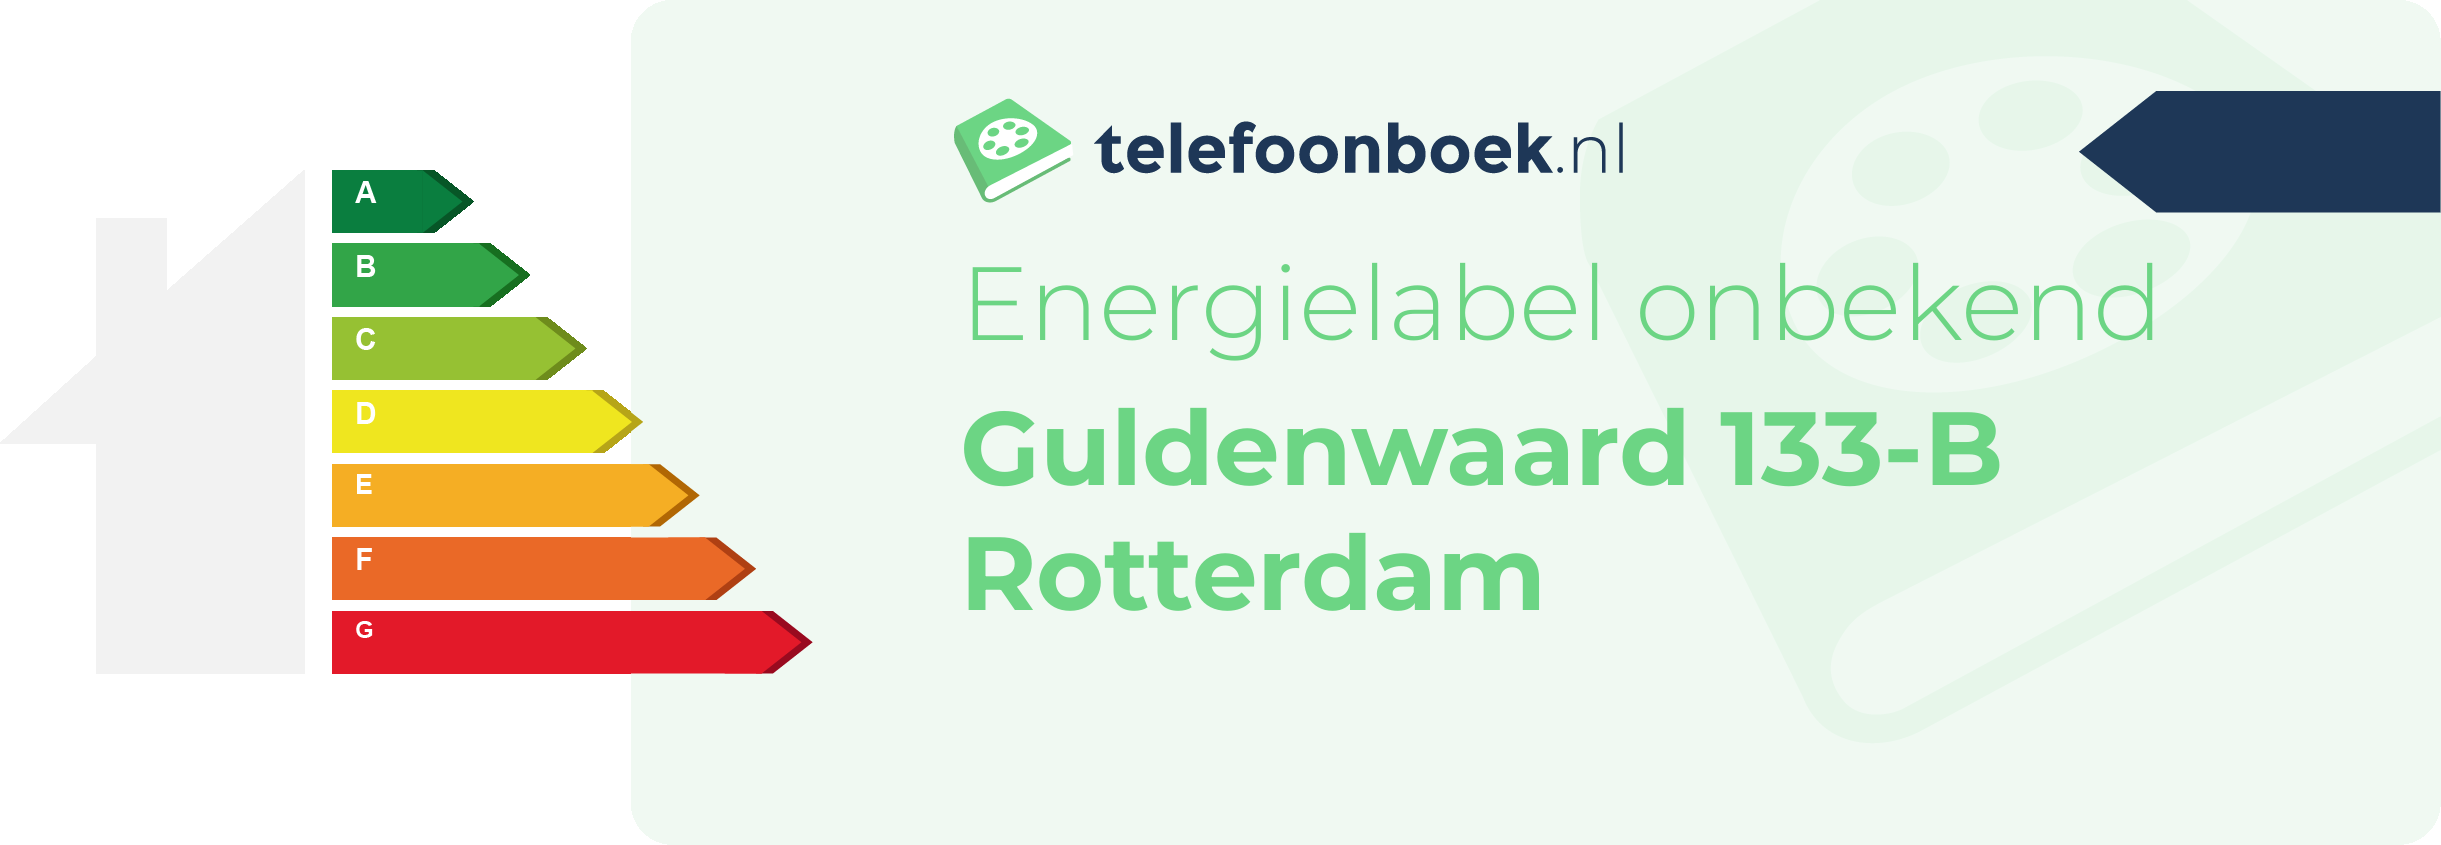 Energielabel Guldenwaard 133-B Rotterdam